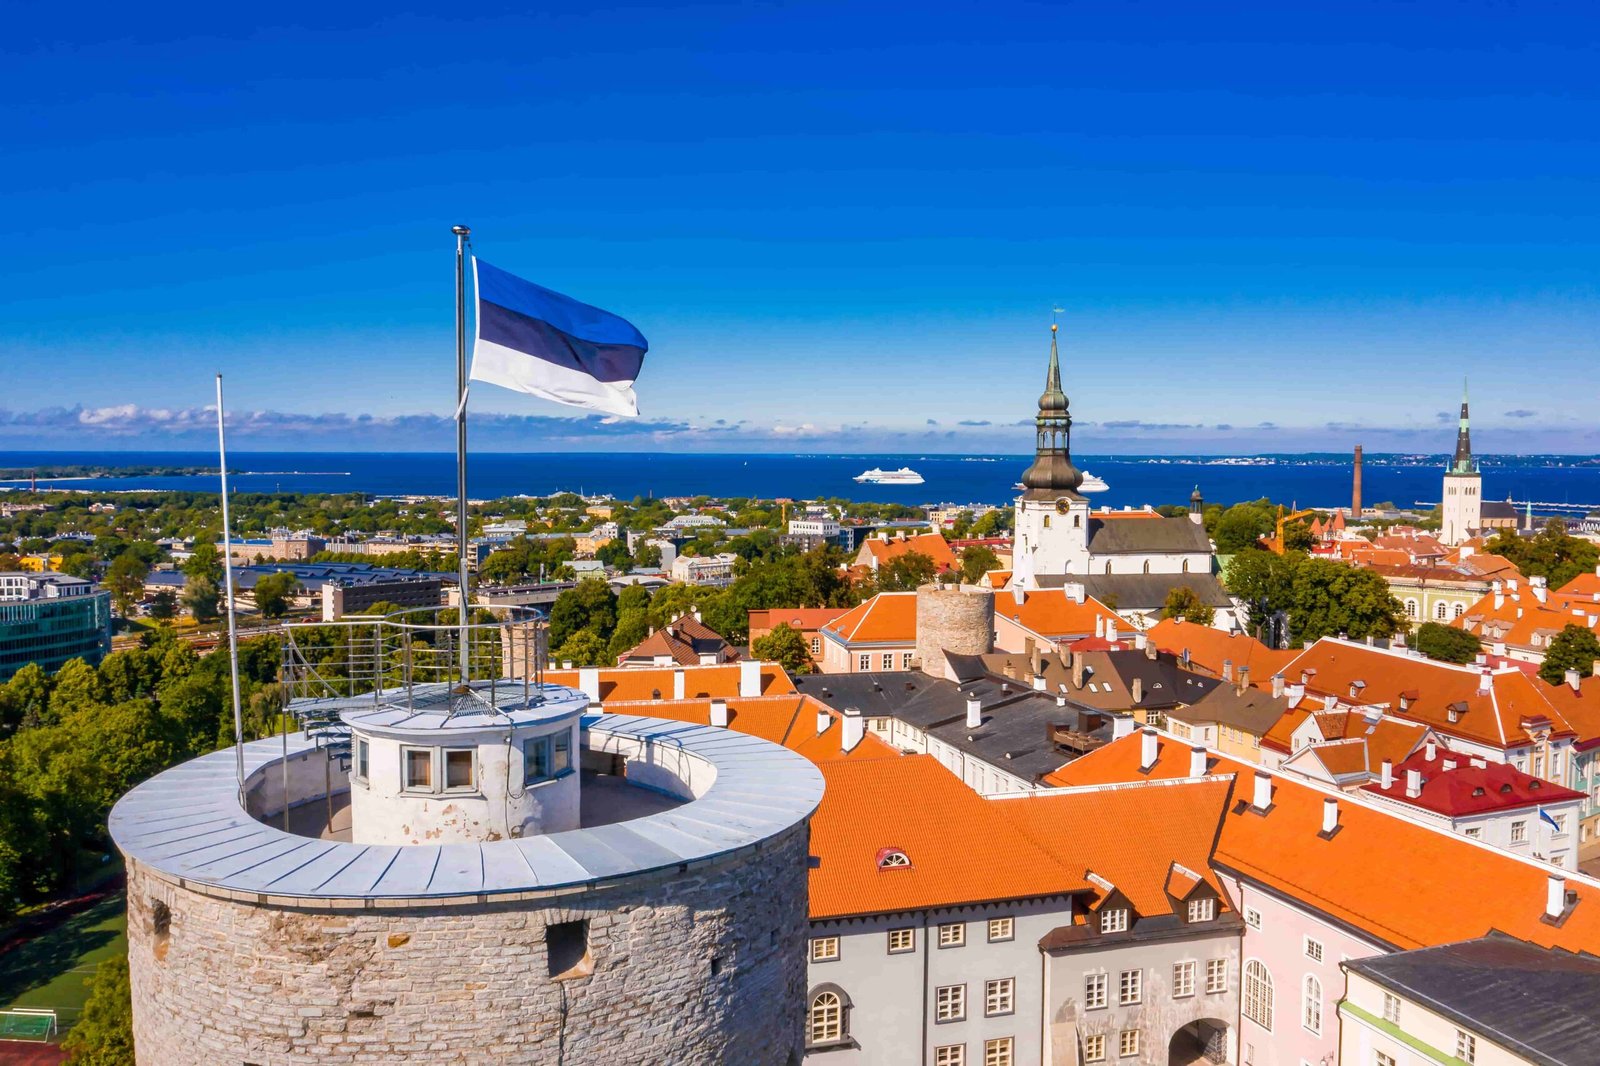 What to do in Tallinn